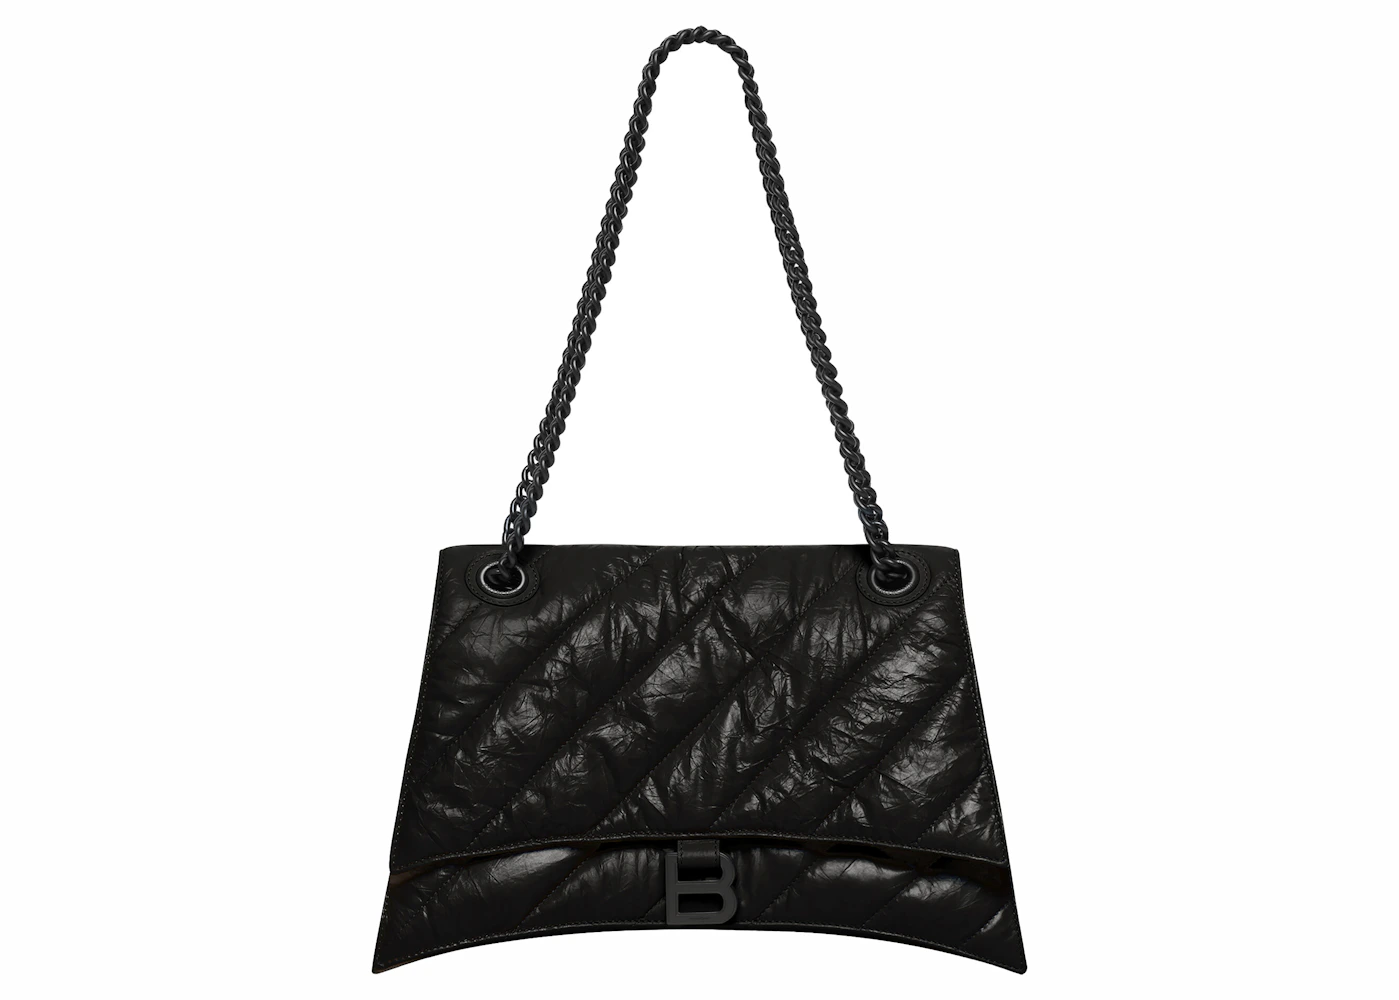 Balenciaga Crush Medium Chain Quilted Bag Black in Crushed Calfskin ...